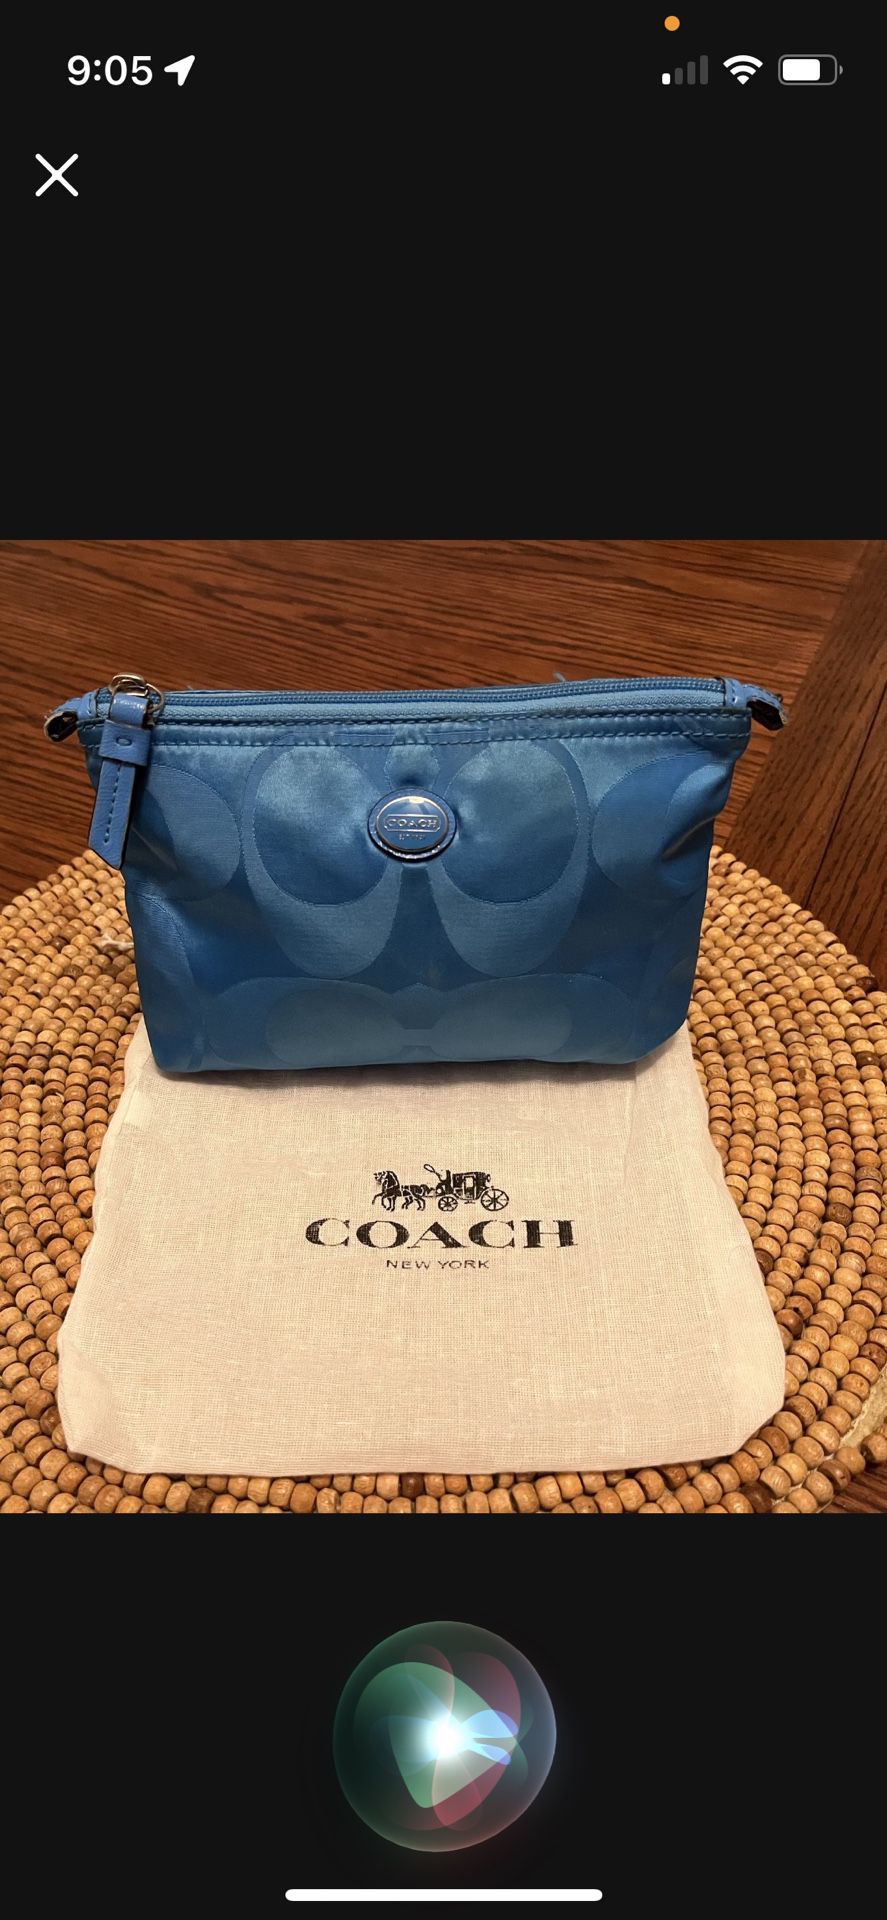 COACH Make Up Cosmetic Bag